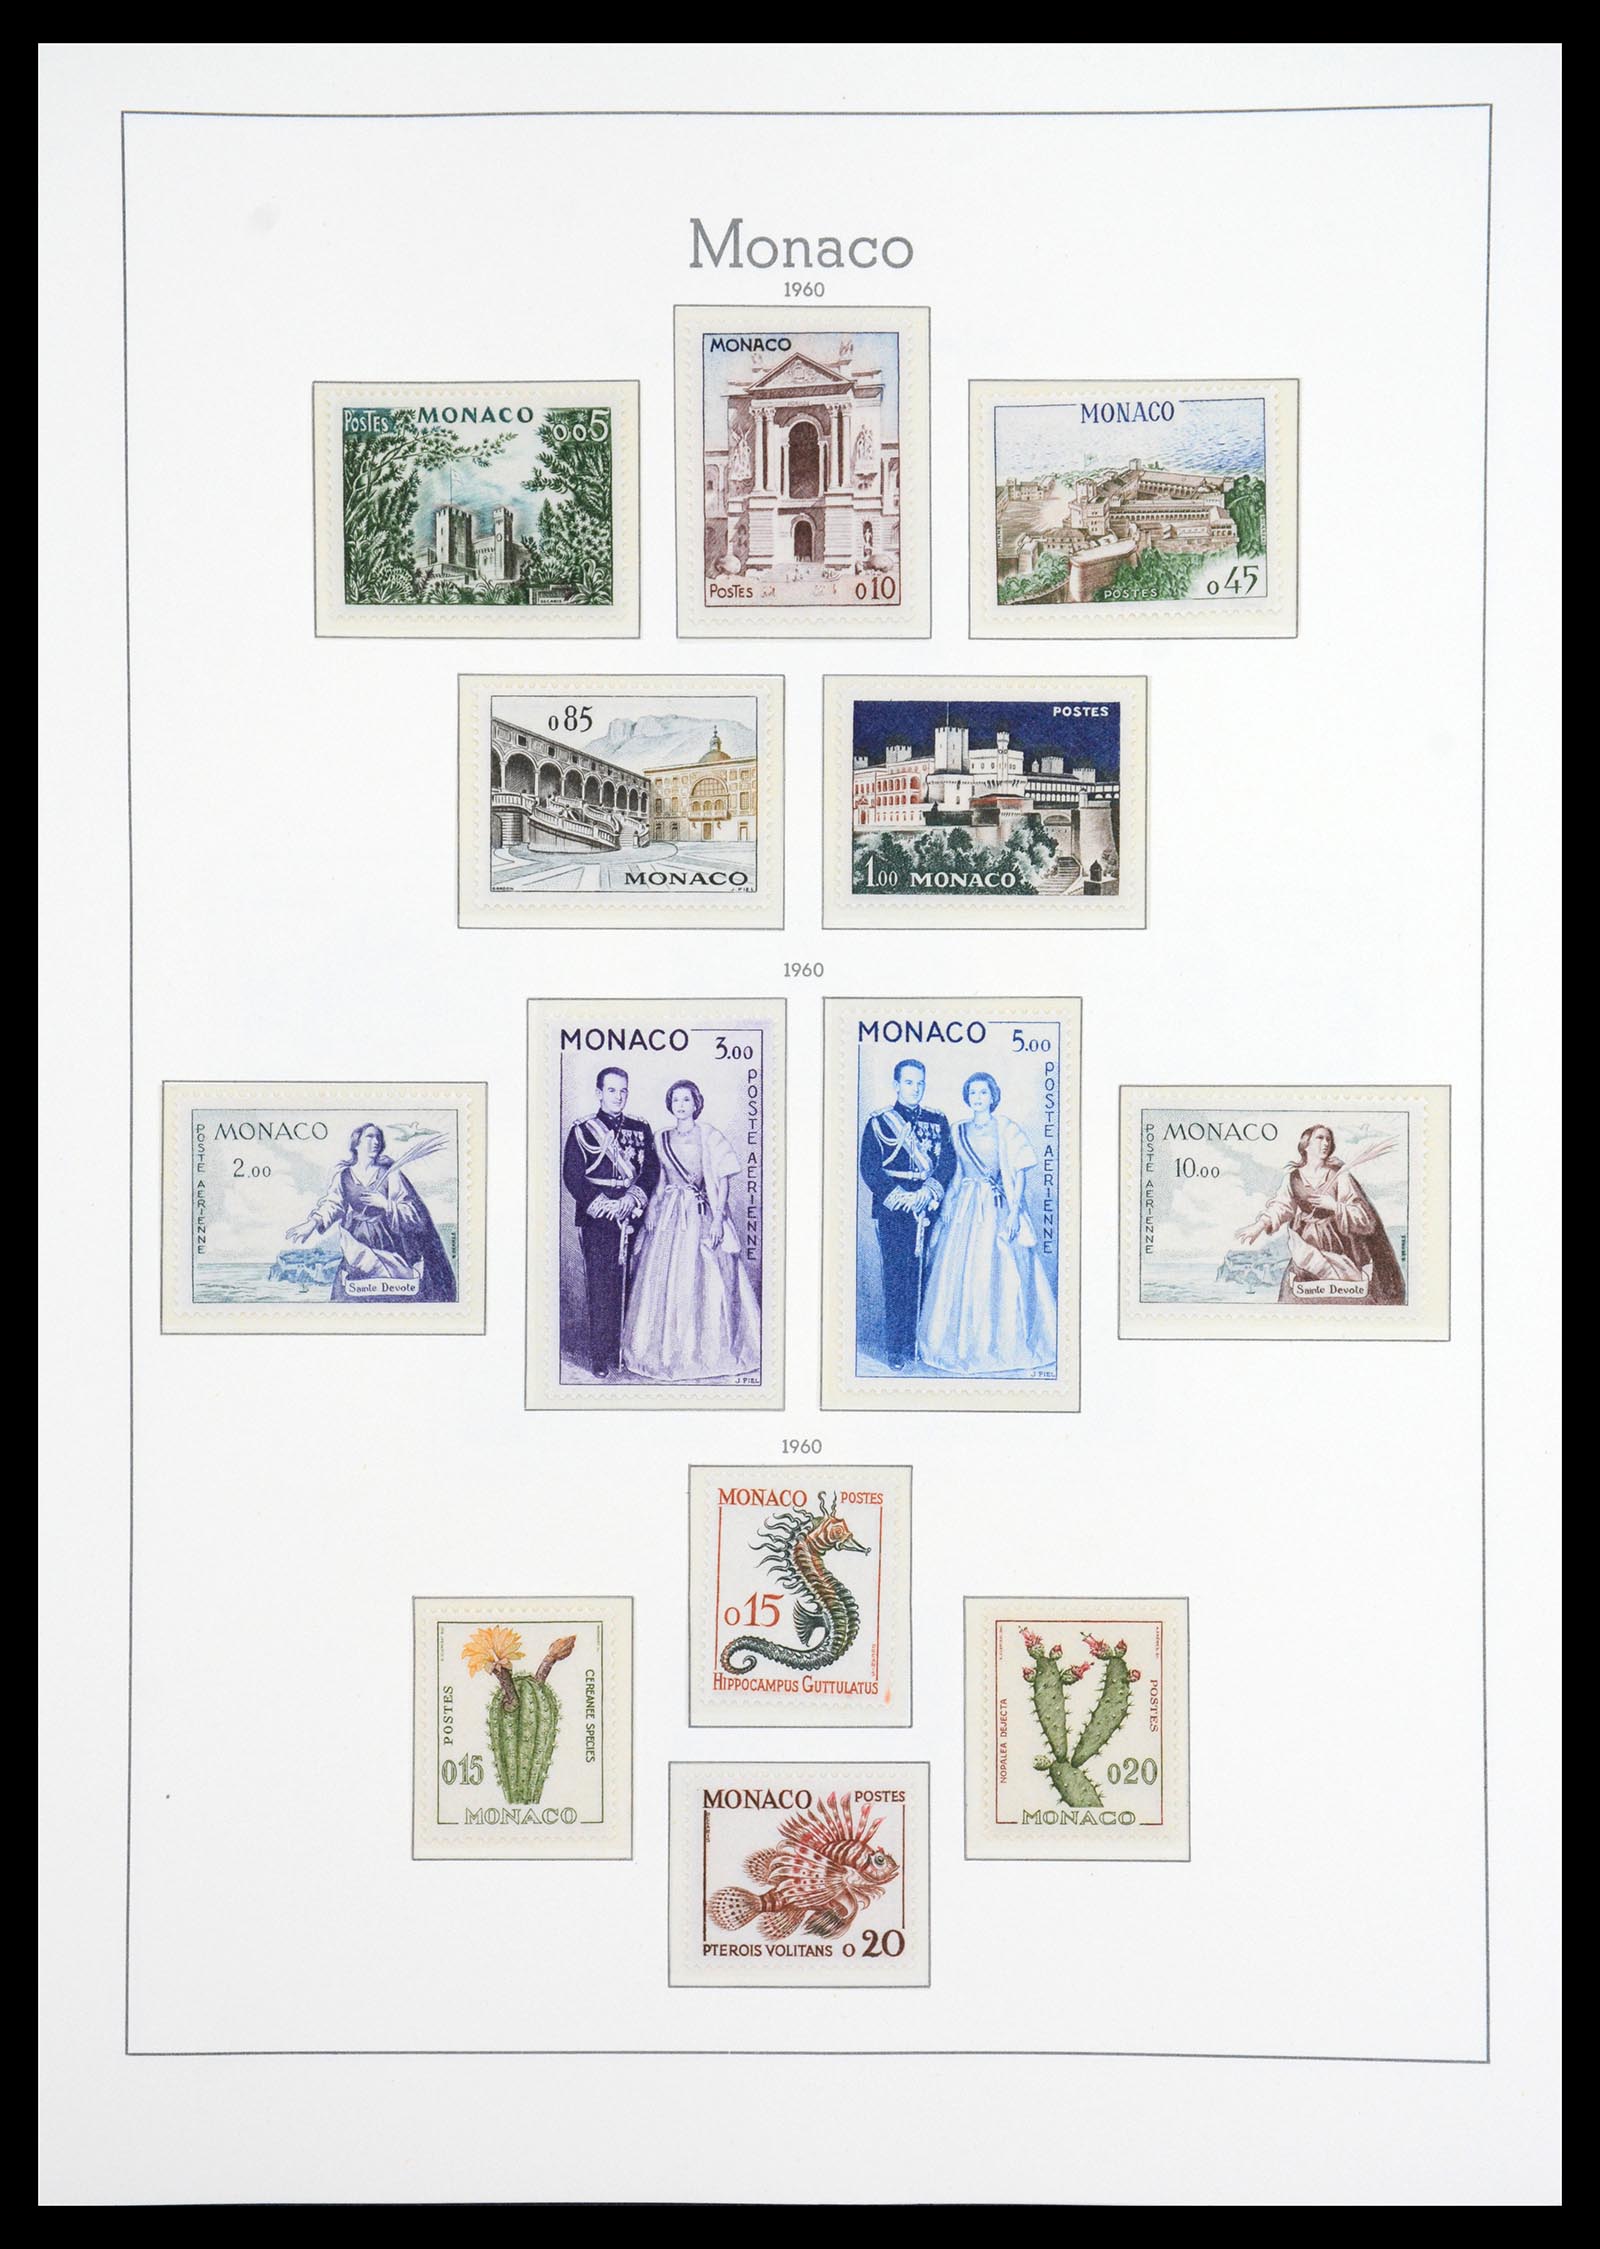 36735 073 - Stamp collection 36735 Monaco 1885-1966.